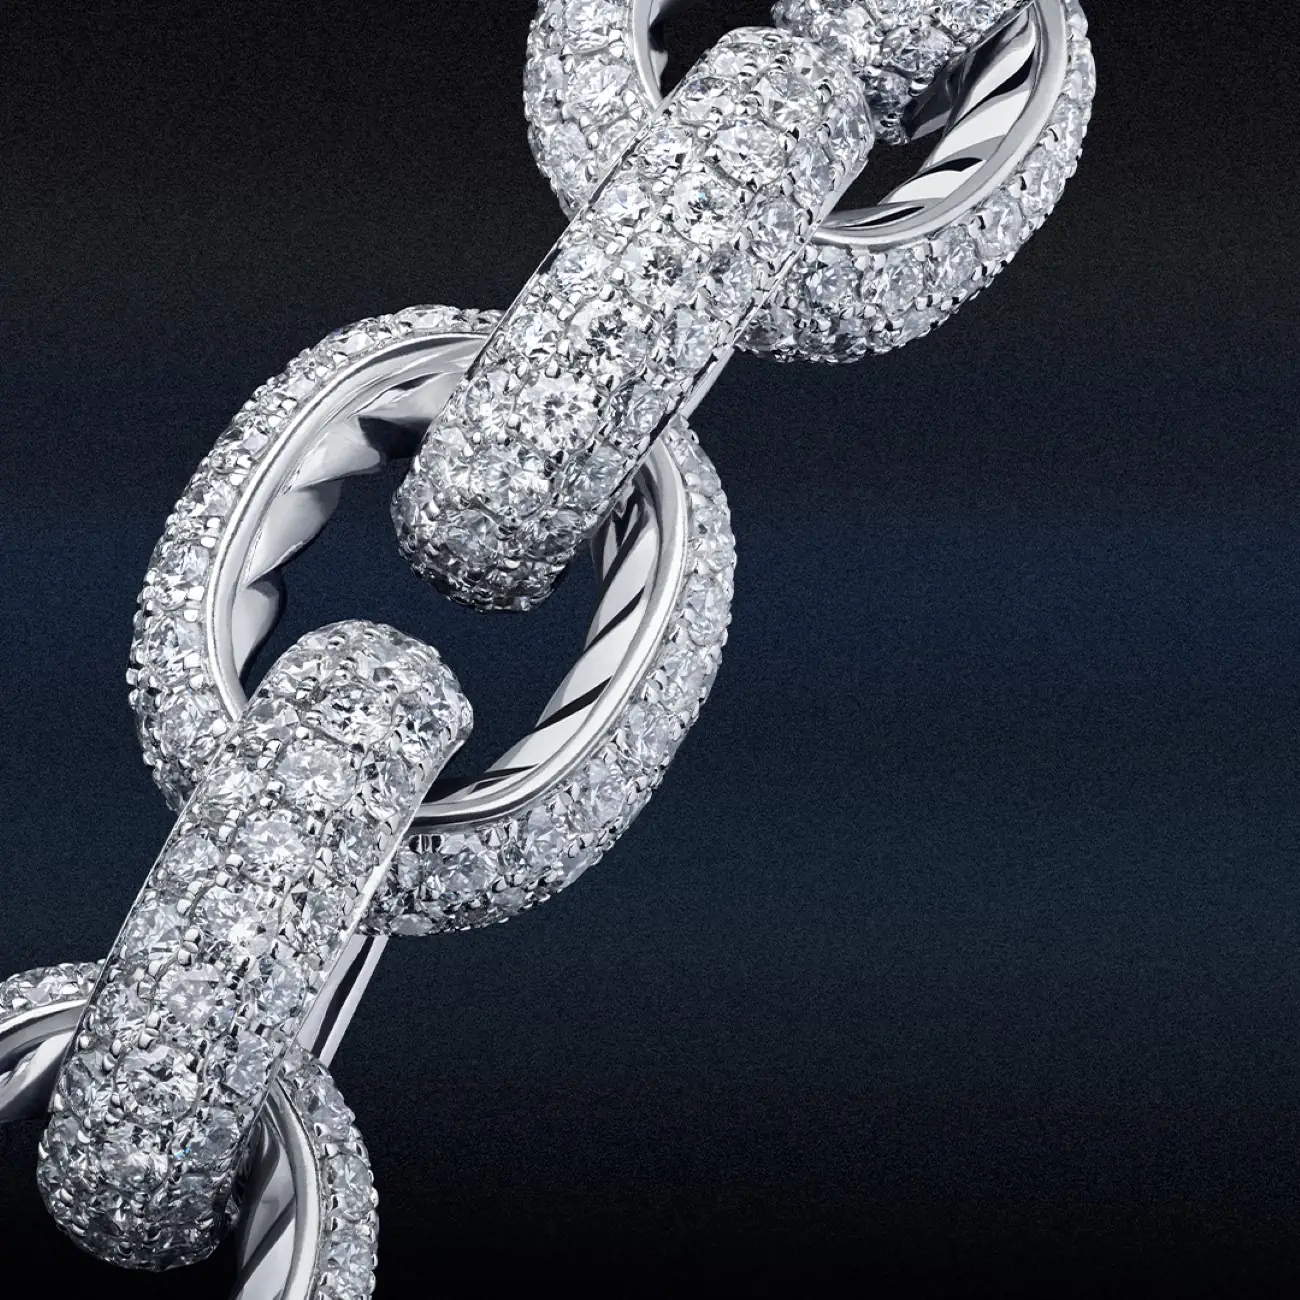 Michael B. Jordan becomes David Yurman's new global brand ambassador for its first Men's High Jewelry line